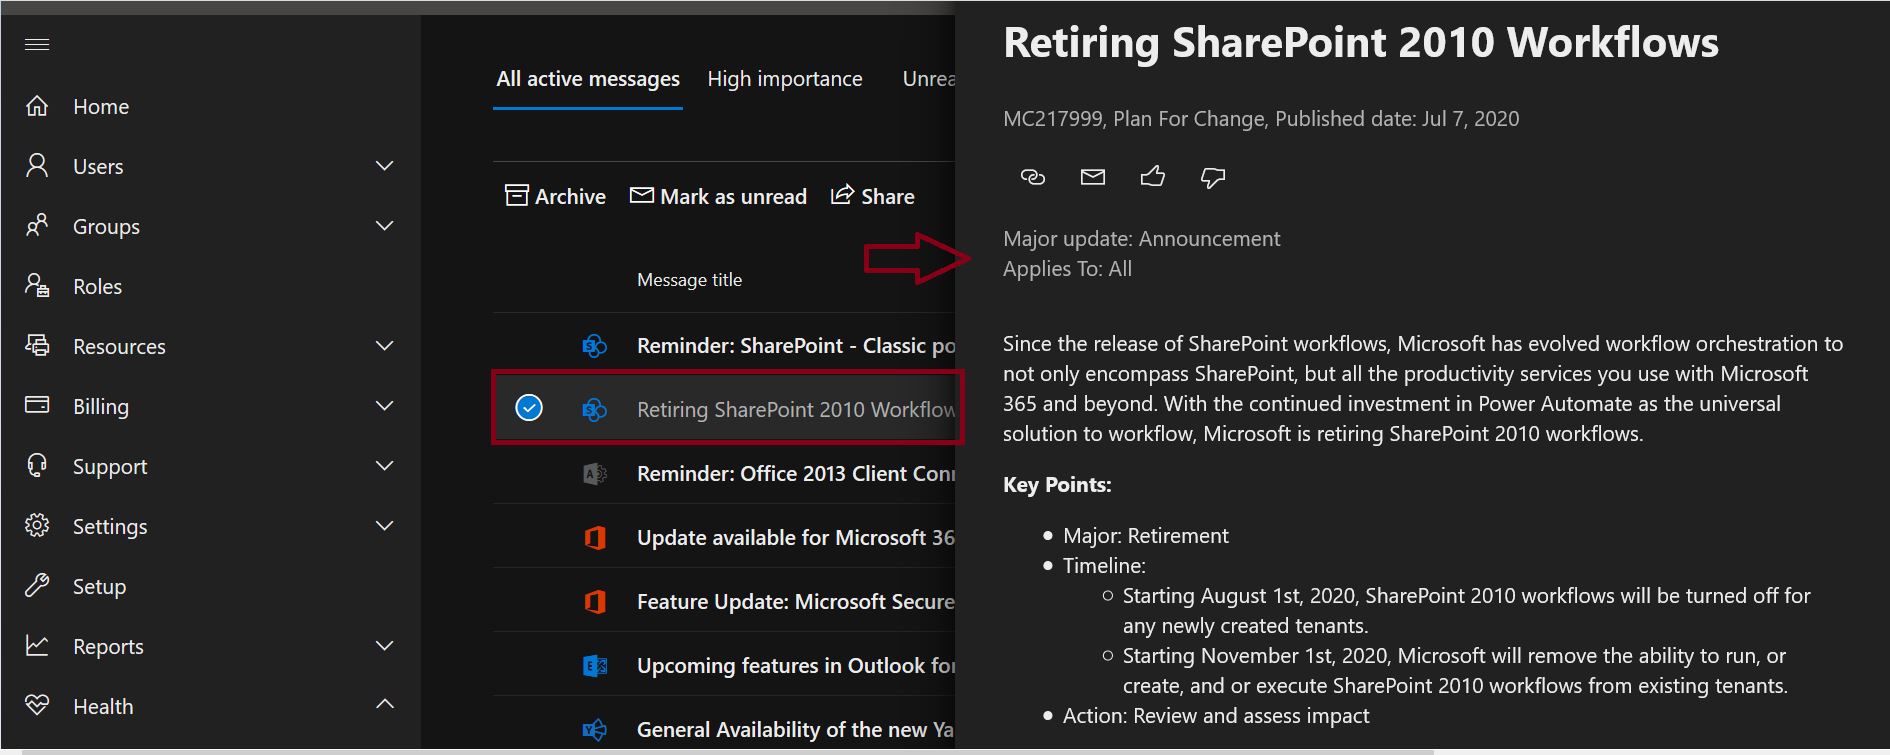 Retiring SharePoint 2010 Workflows announcement in Microsoft 365 admin center